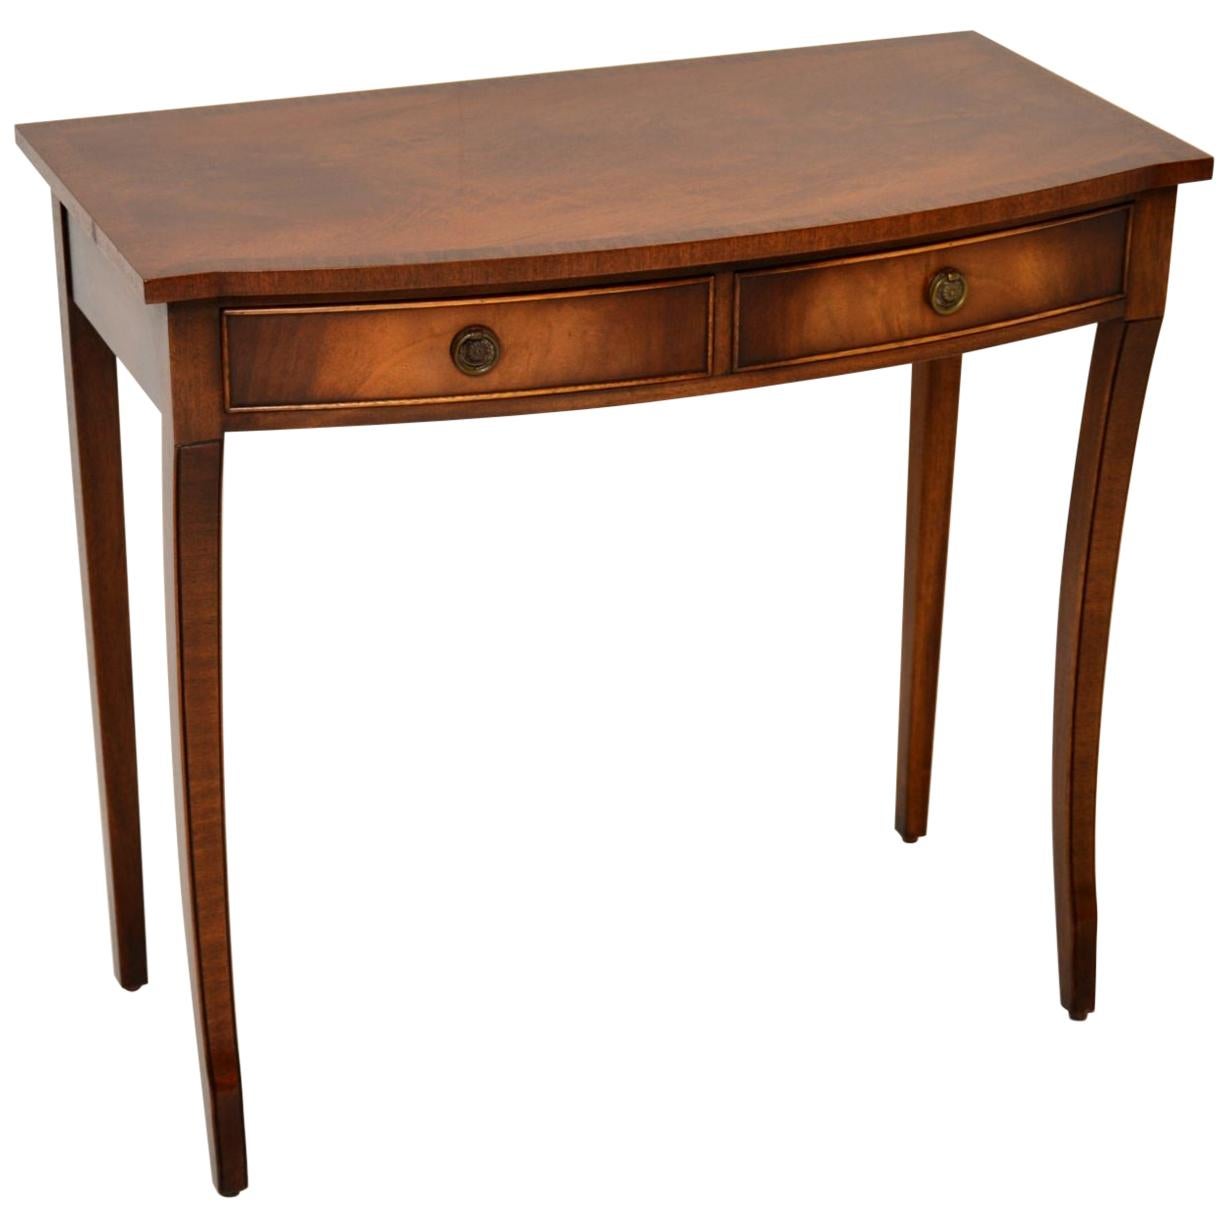 Antique Regency Style Mahogany Console Table